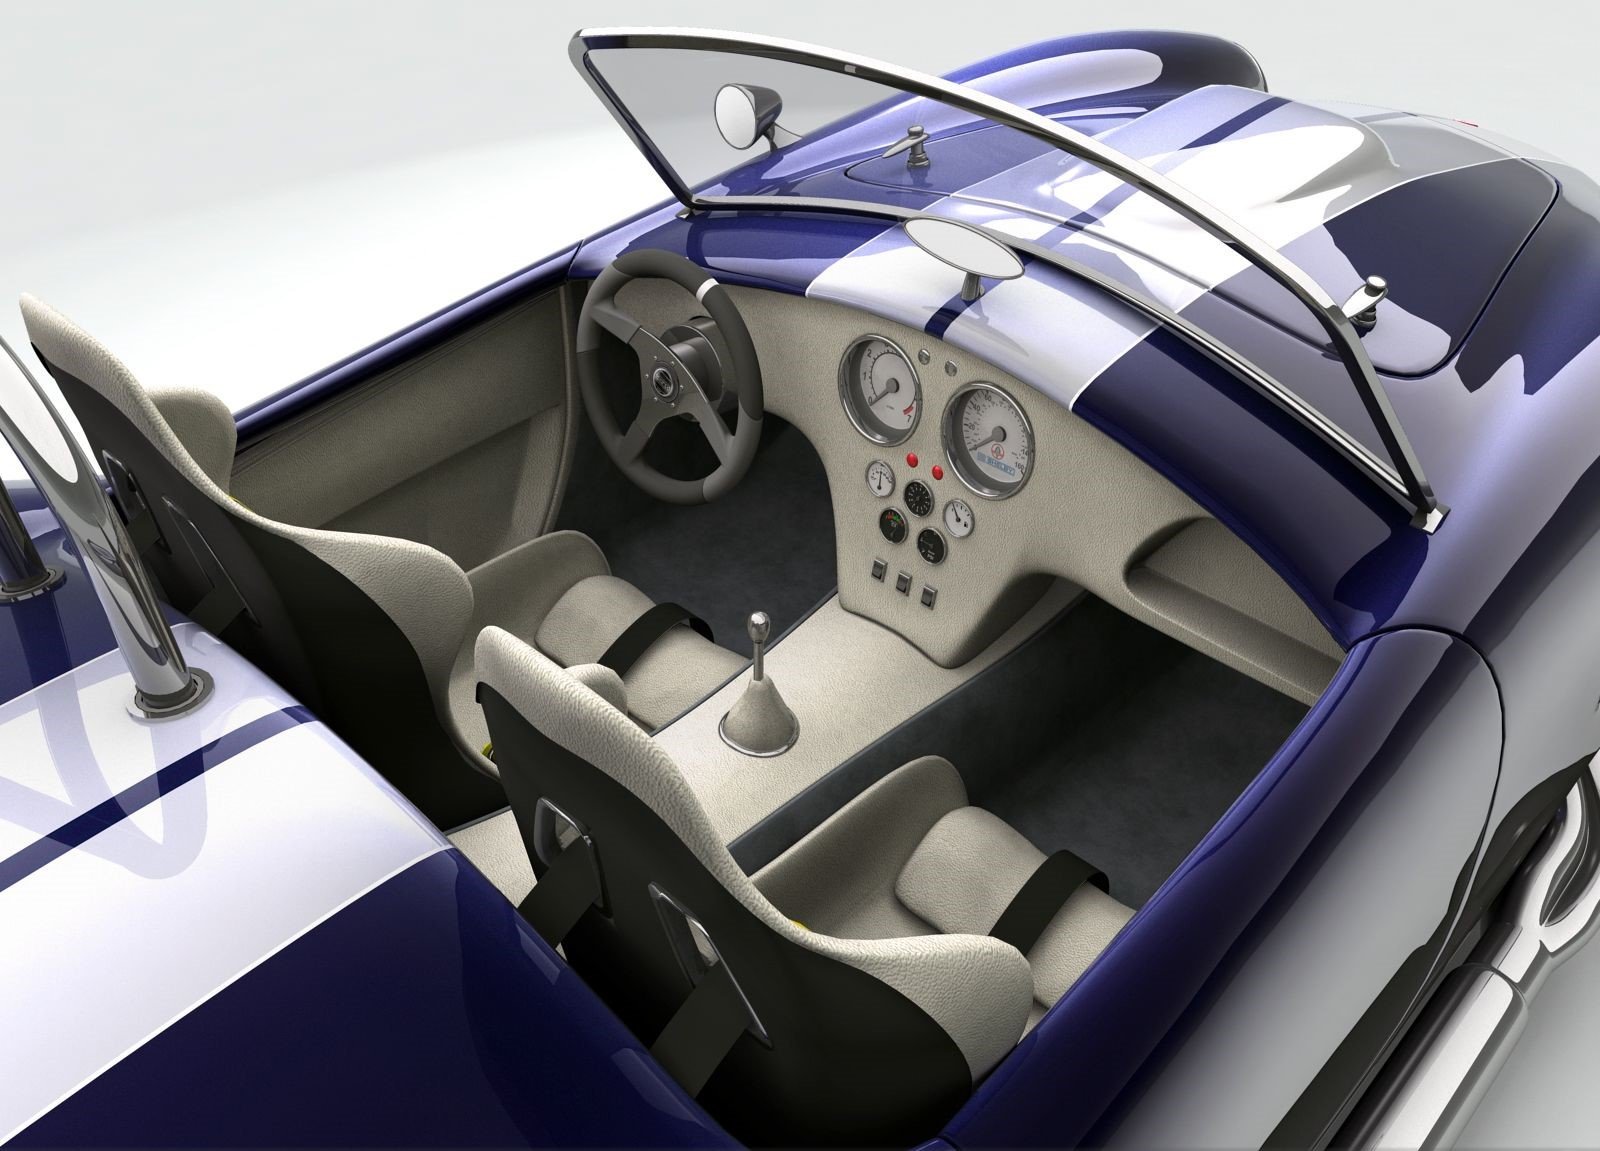 AC Cobra interior - Cockpit